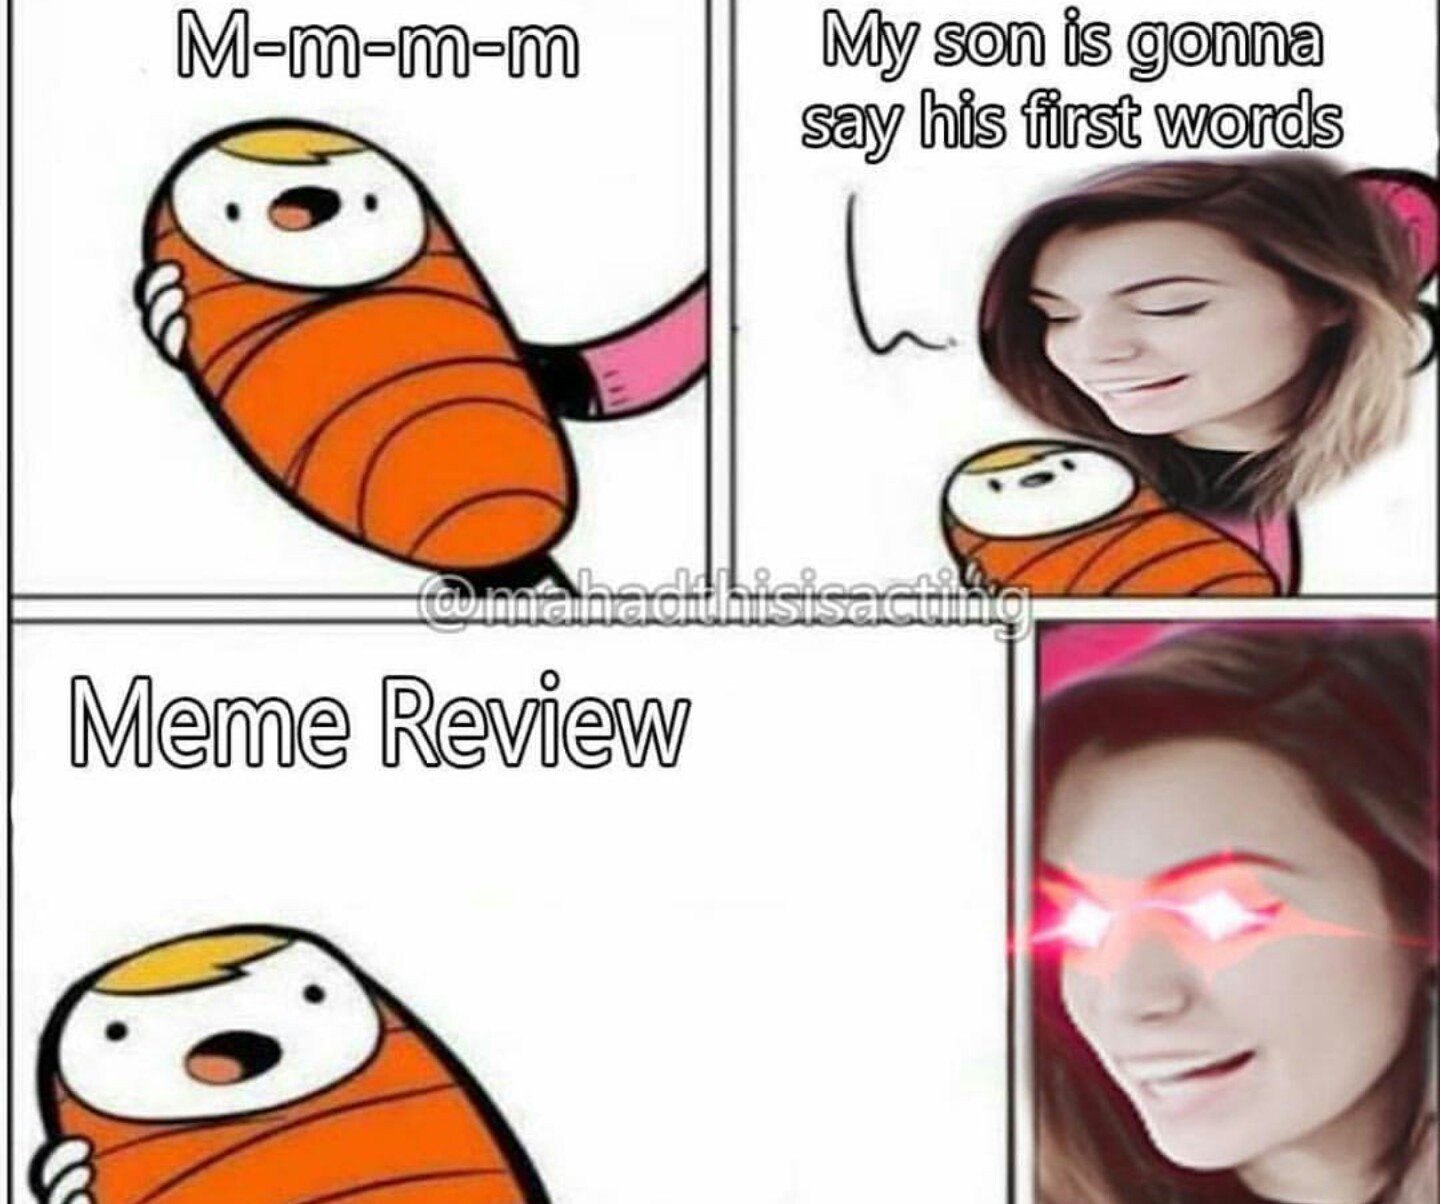 Meme review